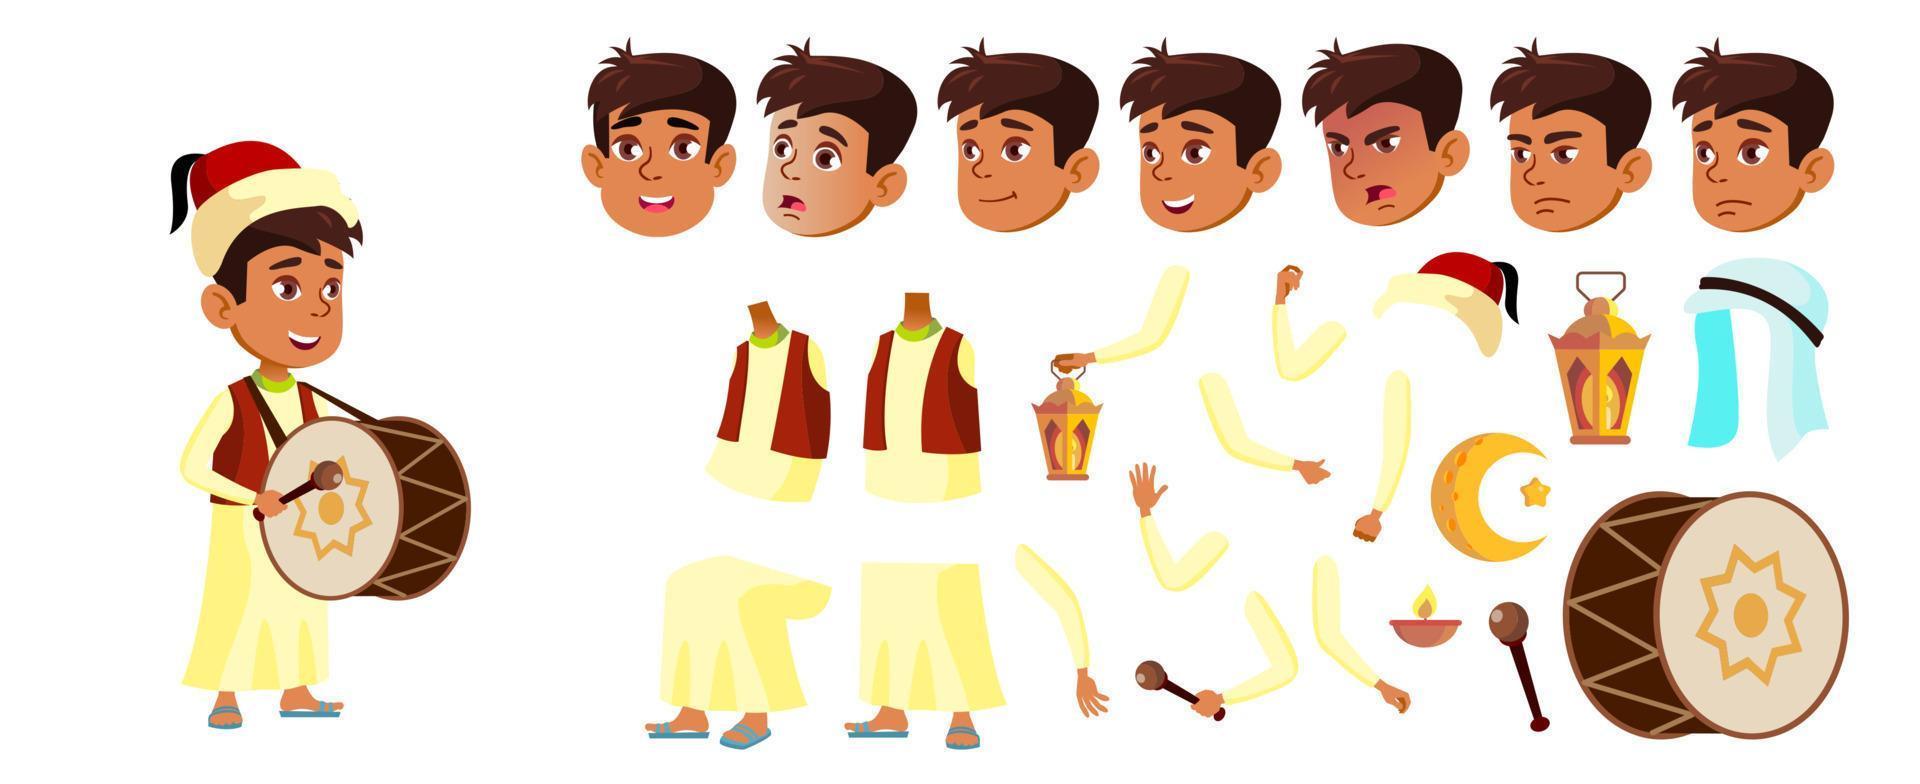 Arab, Muslim Boy Schoolboy Kid Vector. Celebrating Ramadan Kareem. Animation Creation Set. Young. For Postcard, Cover, Placard Design. Face Emotions, Gestures. Animated. Isolated Cartoon Illustration vector